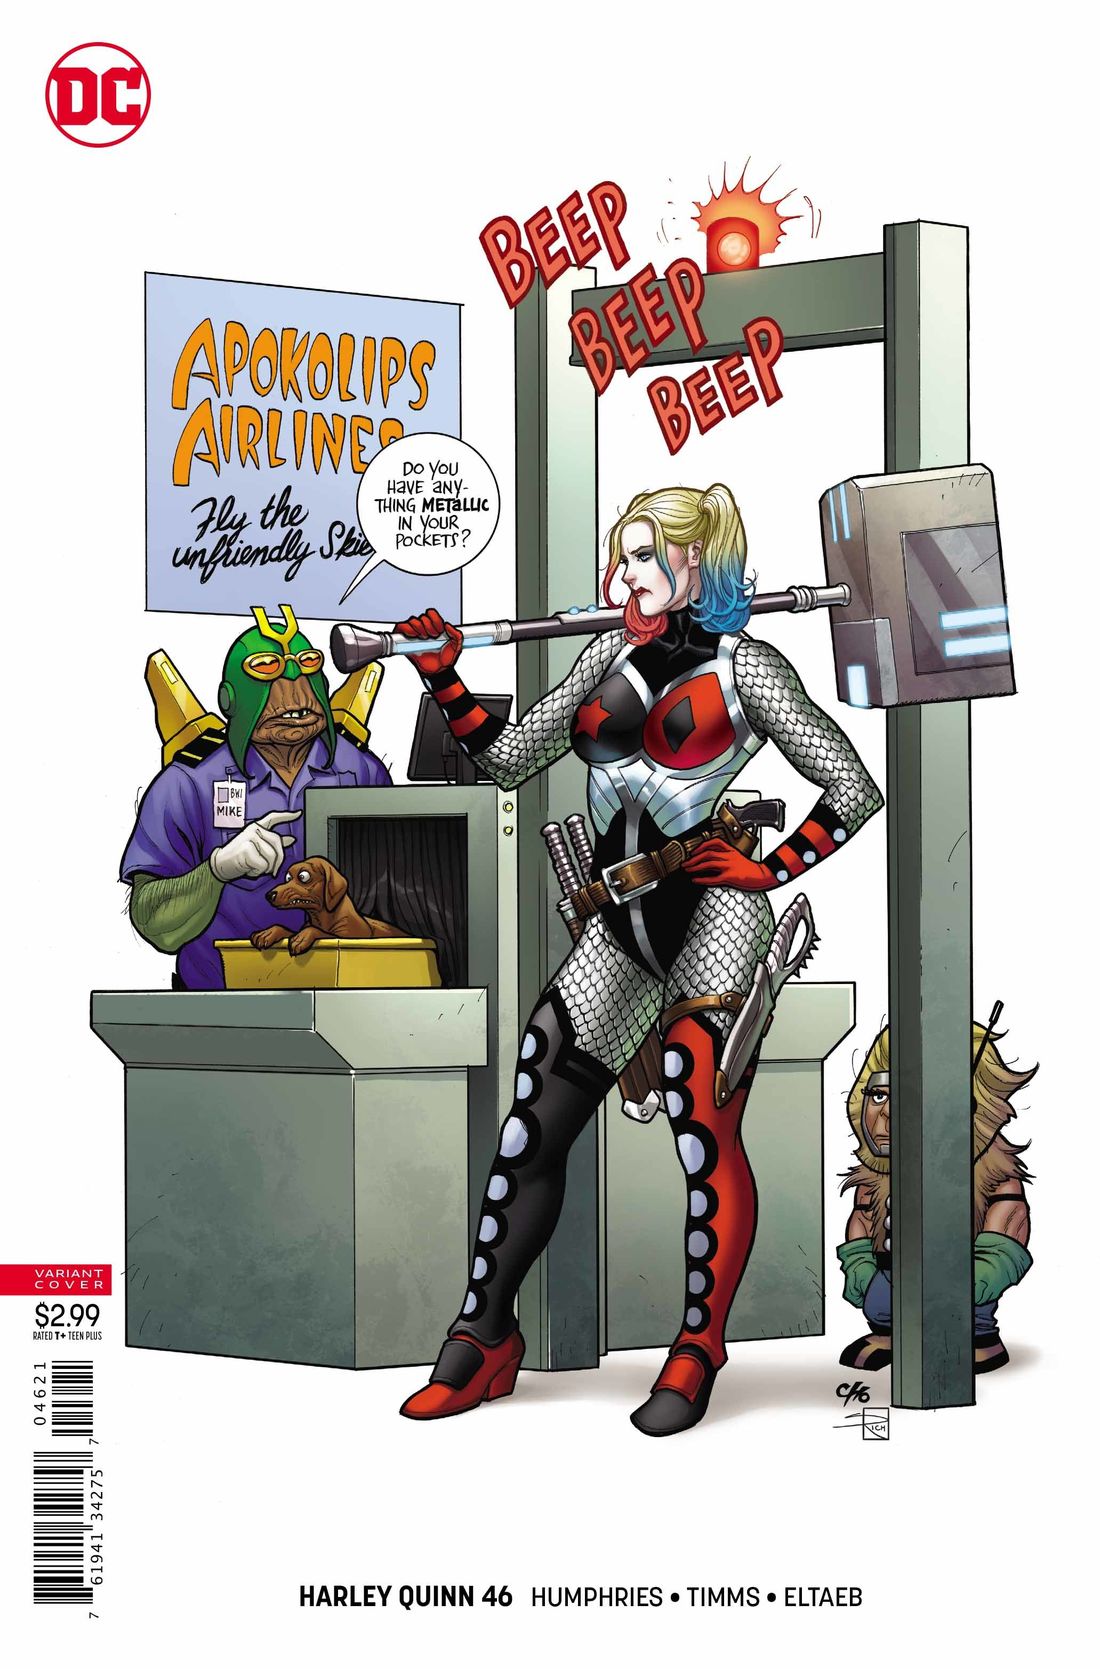 Harley Quinn #46 Review